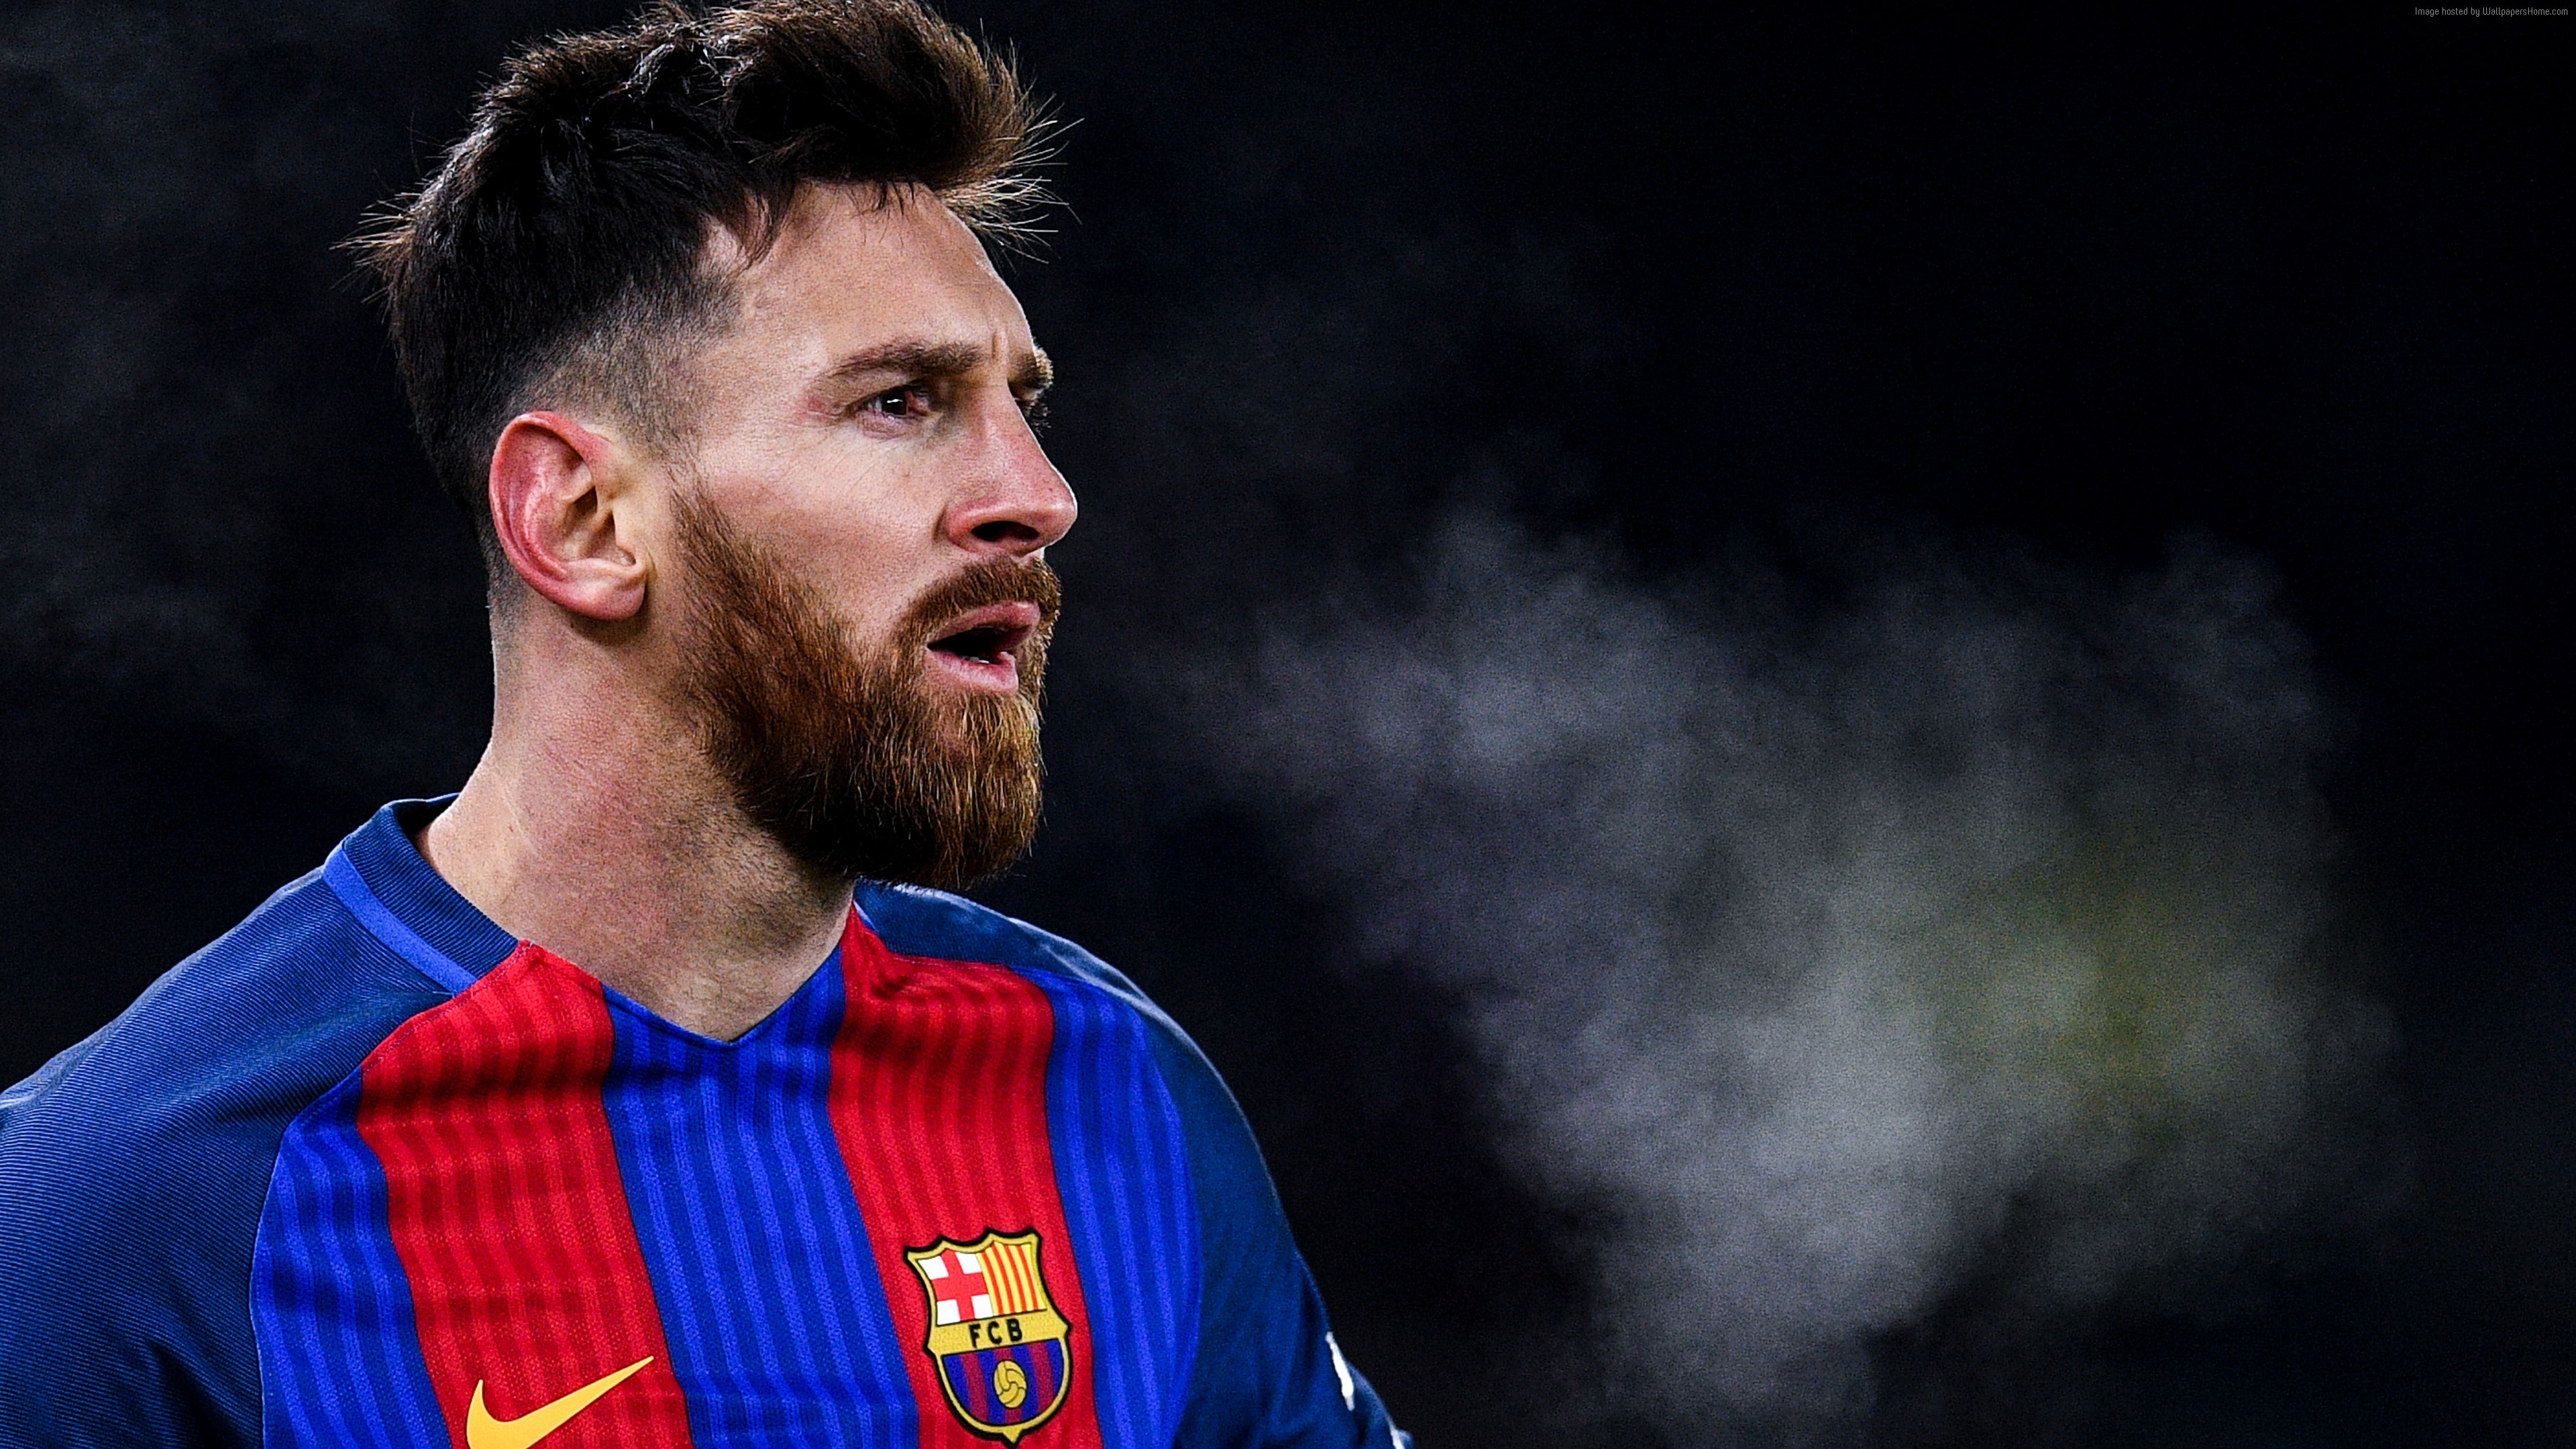 Wallpaper Lionel Messi, Soccer, Football, The Best - Lionel Messi - HD Wallpaper 